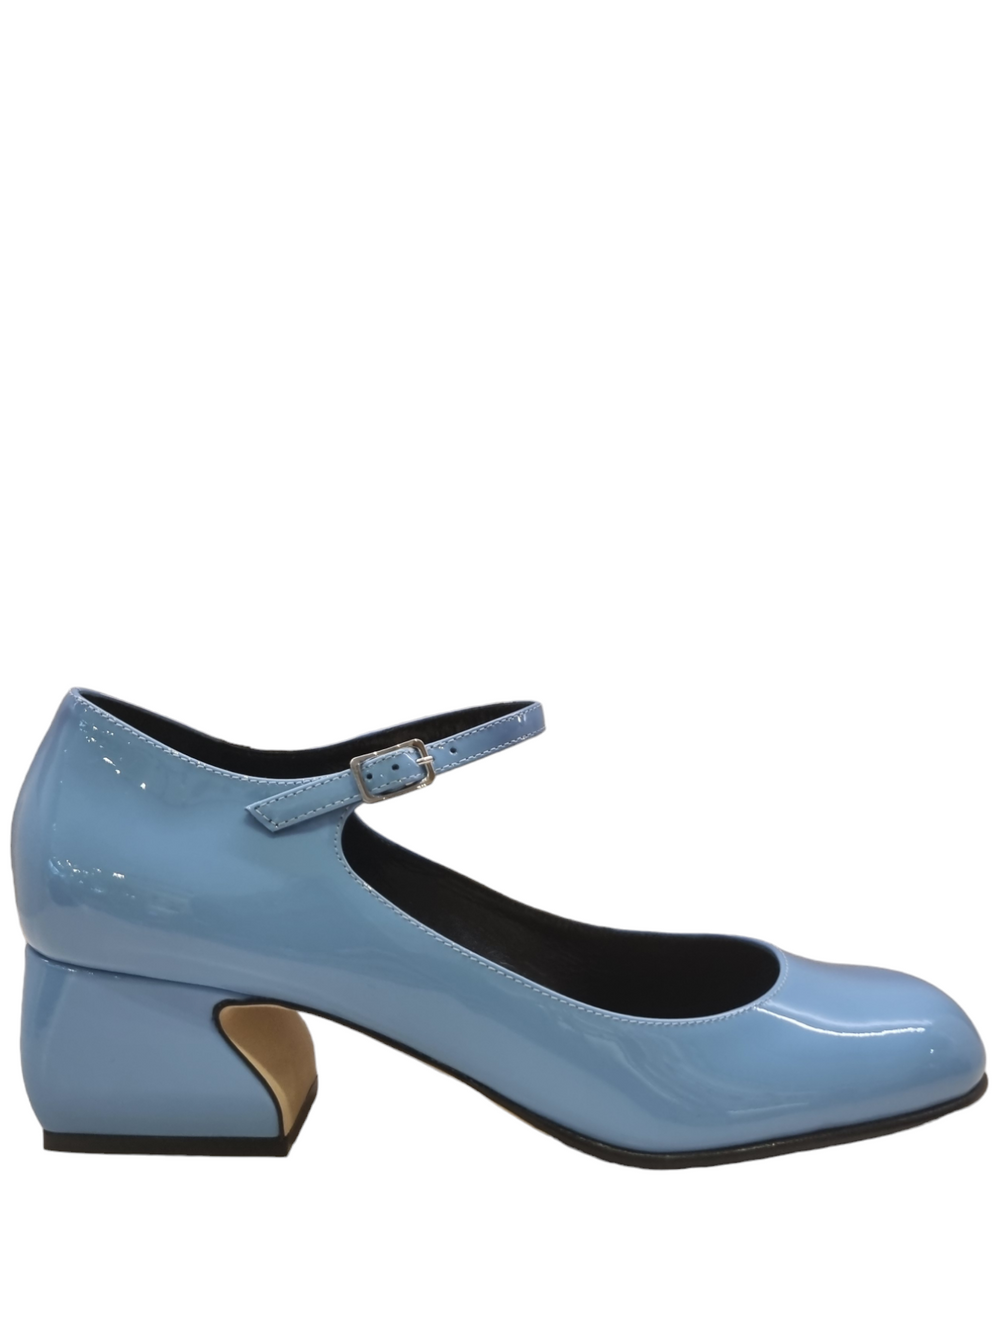 Si Rossi Blue Patent Mary Jane - SERGIO ROSSI - Liberty Shoes Australia